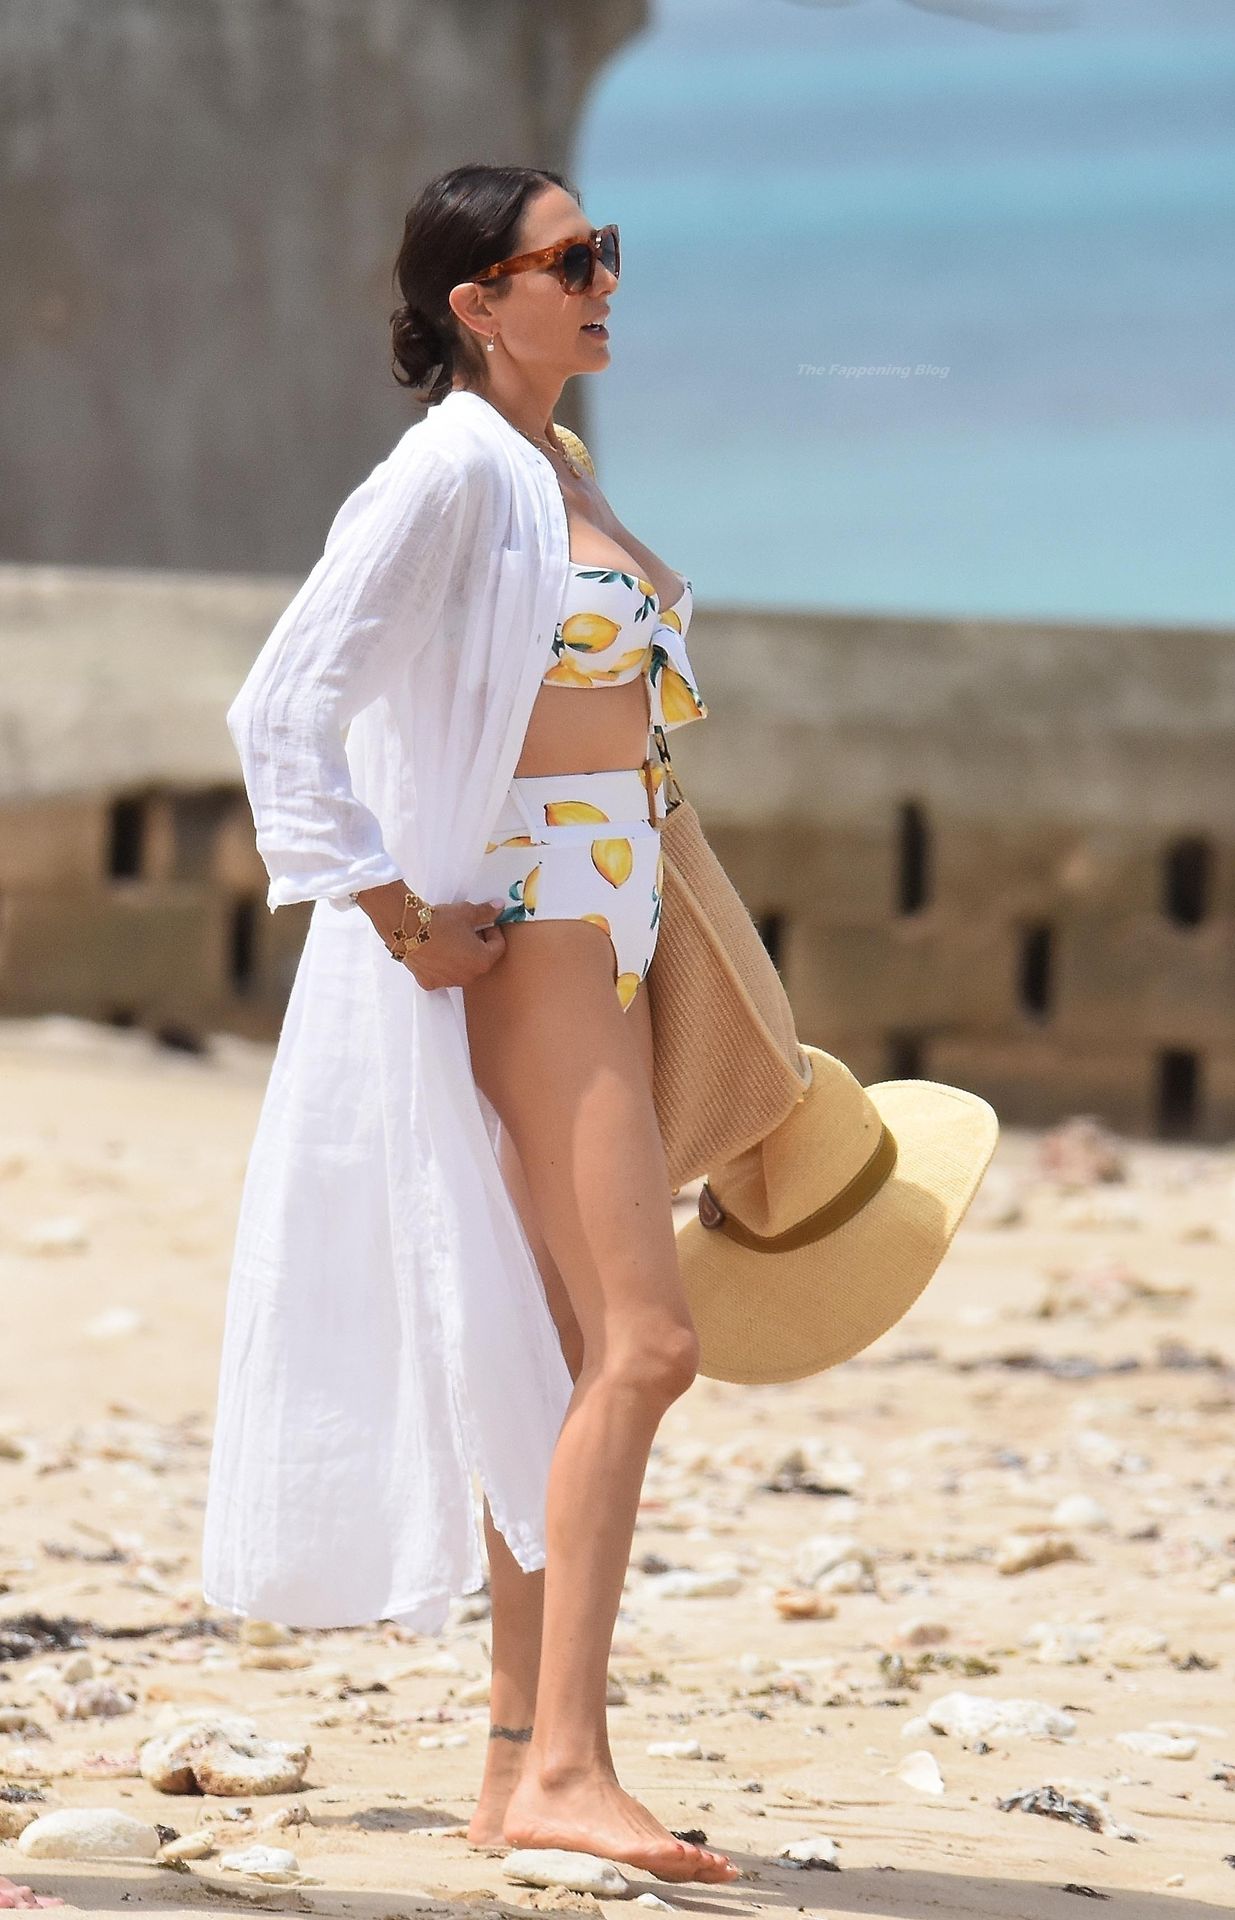 Simon Cowell & Lauren Silverman Enjoy a Relaxing Day on the Beach in Barbados (46 Photos)